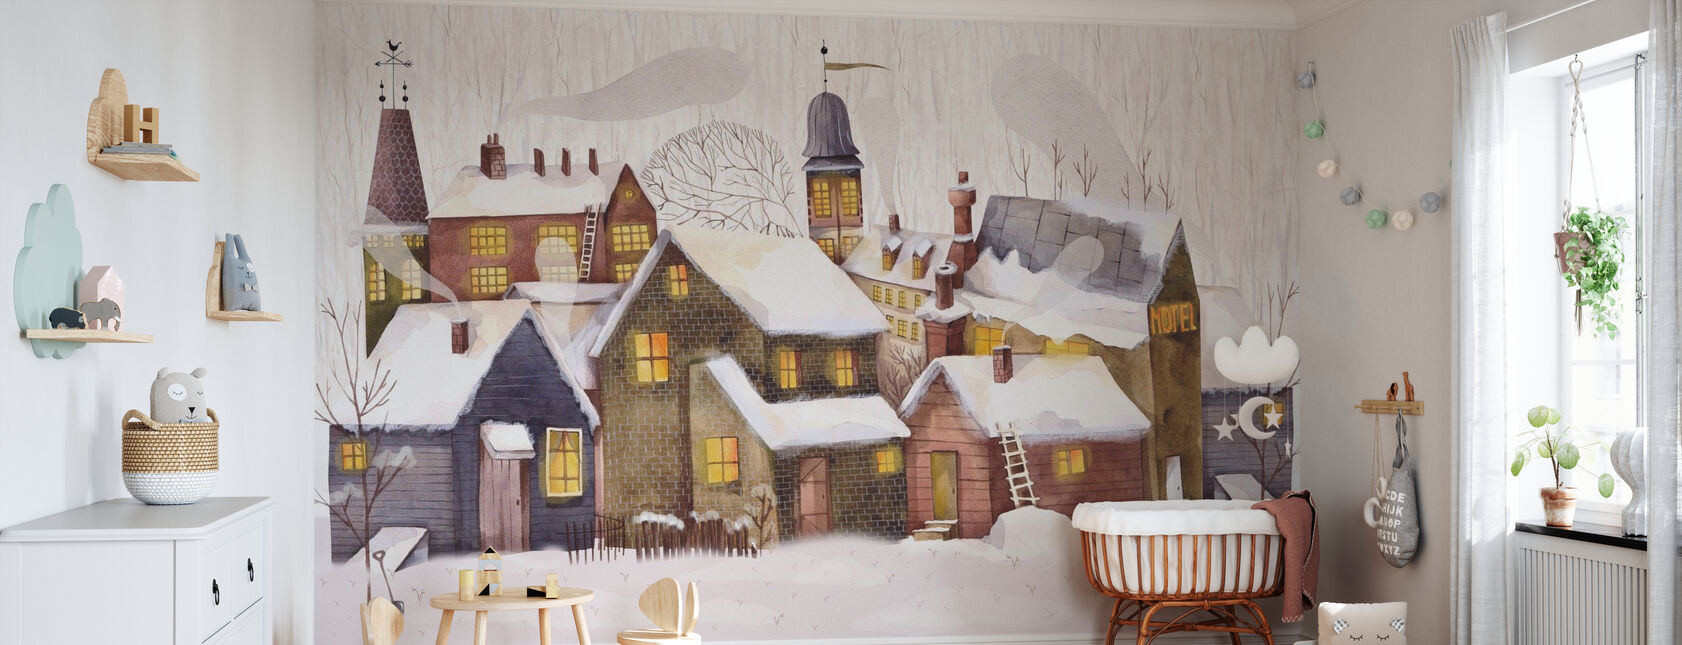 Houses in Winter Snow - Wallpaper - Nursery